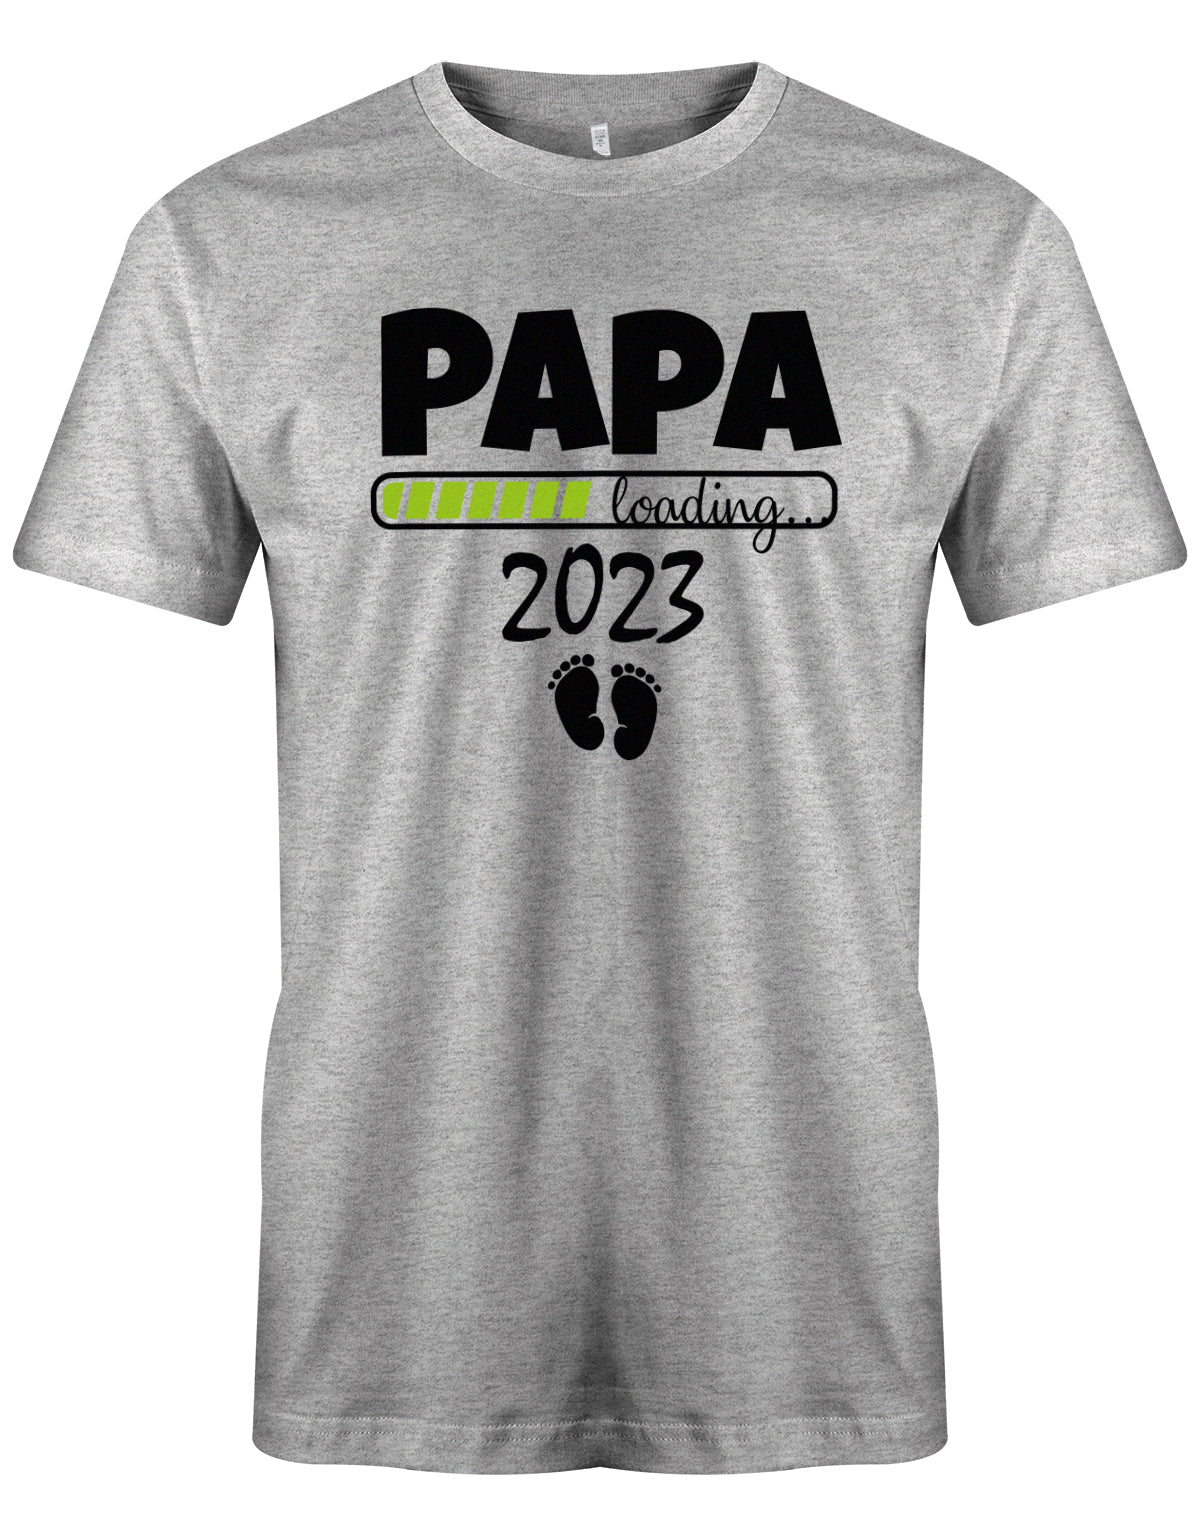 Papa loading 2023 - Geburt - Werdender Papa Shirt Herren Grau